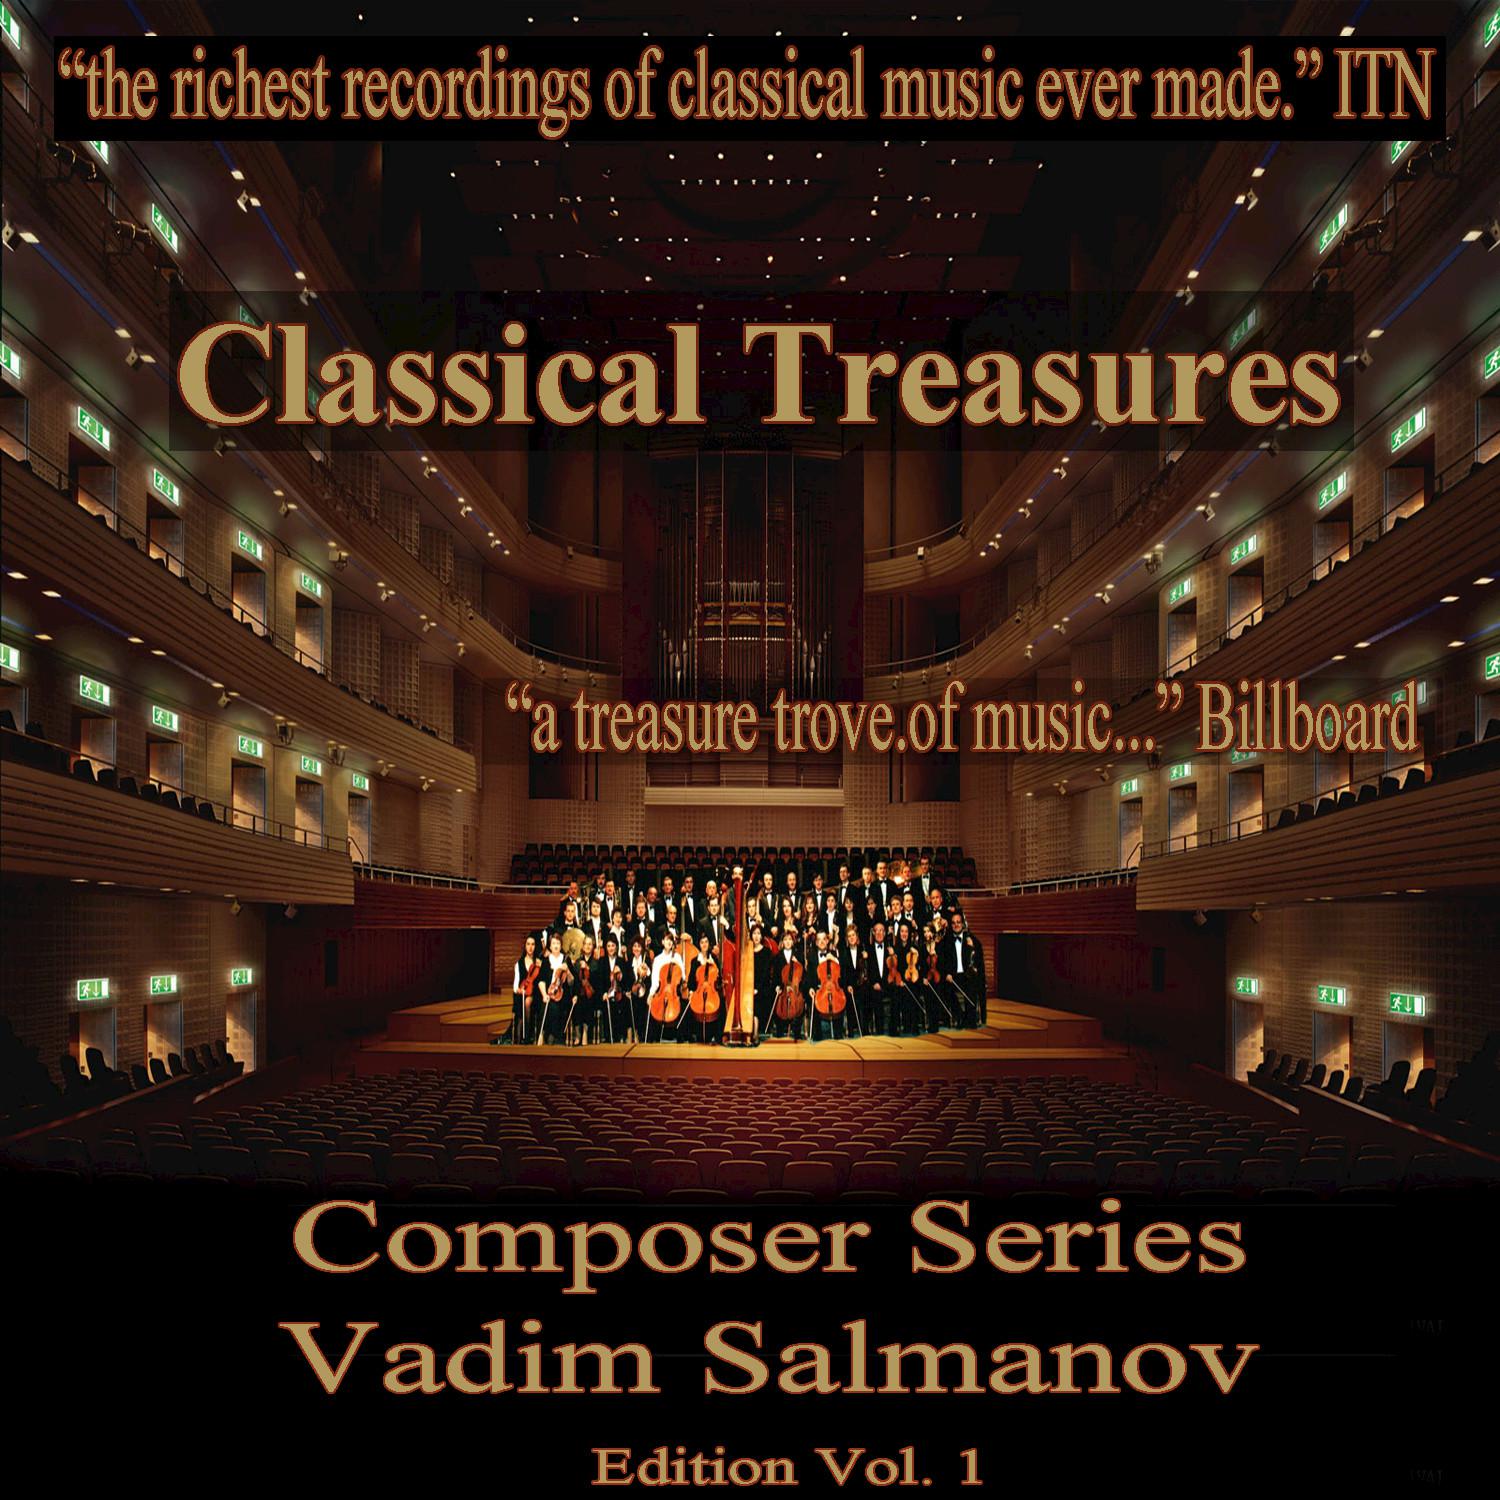 Classical Treasures Composer Series: Vadim Salmanov, Vol. 1